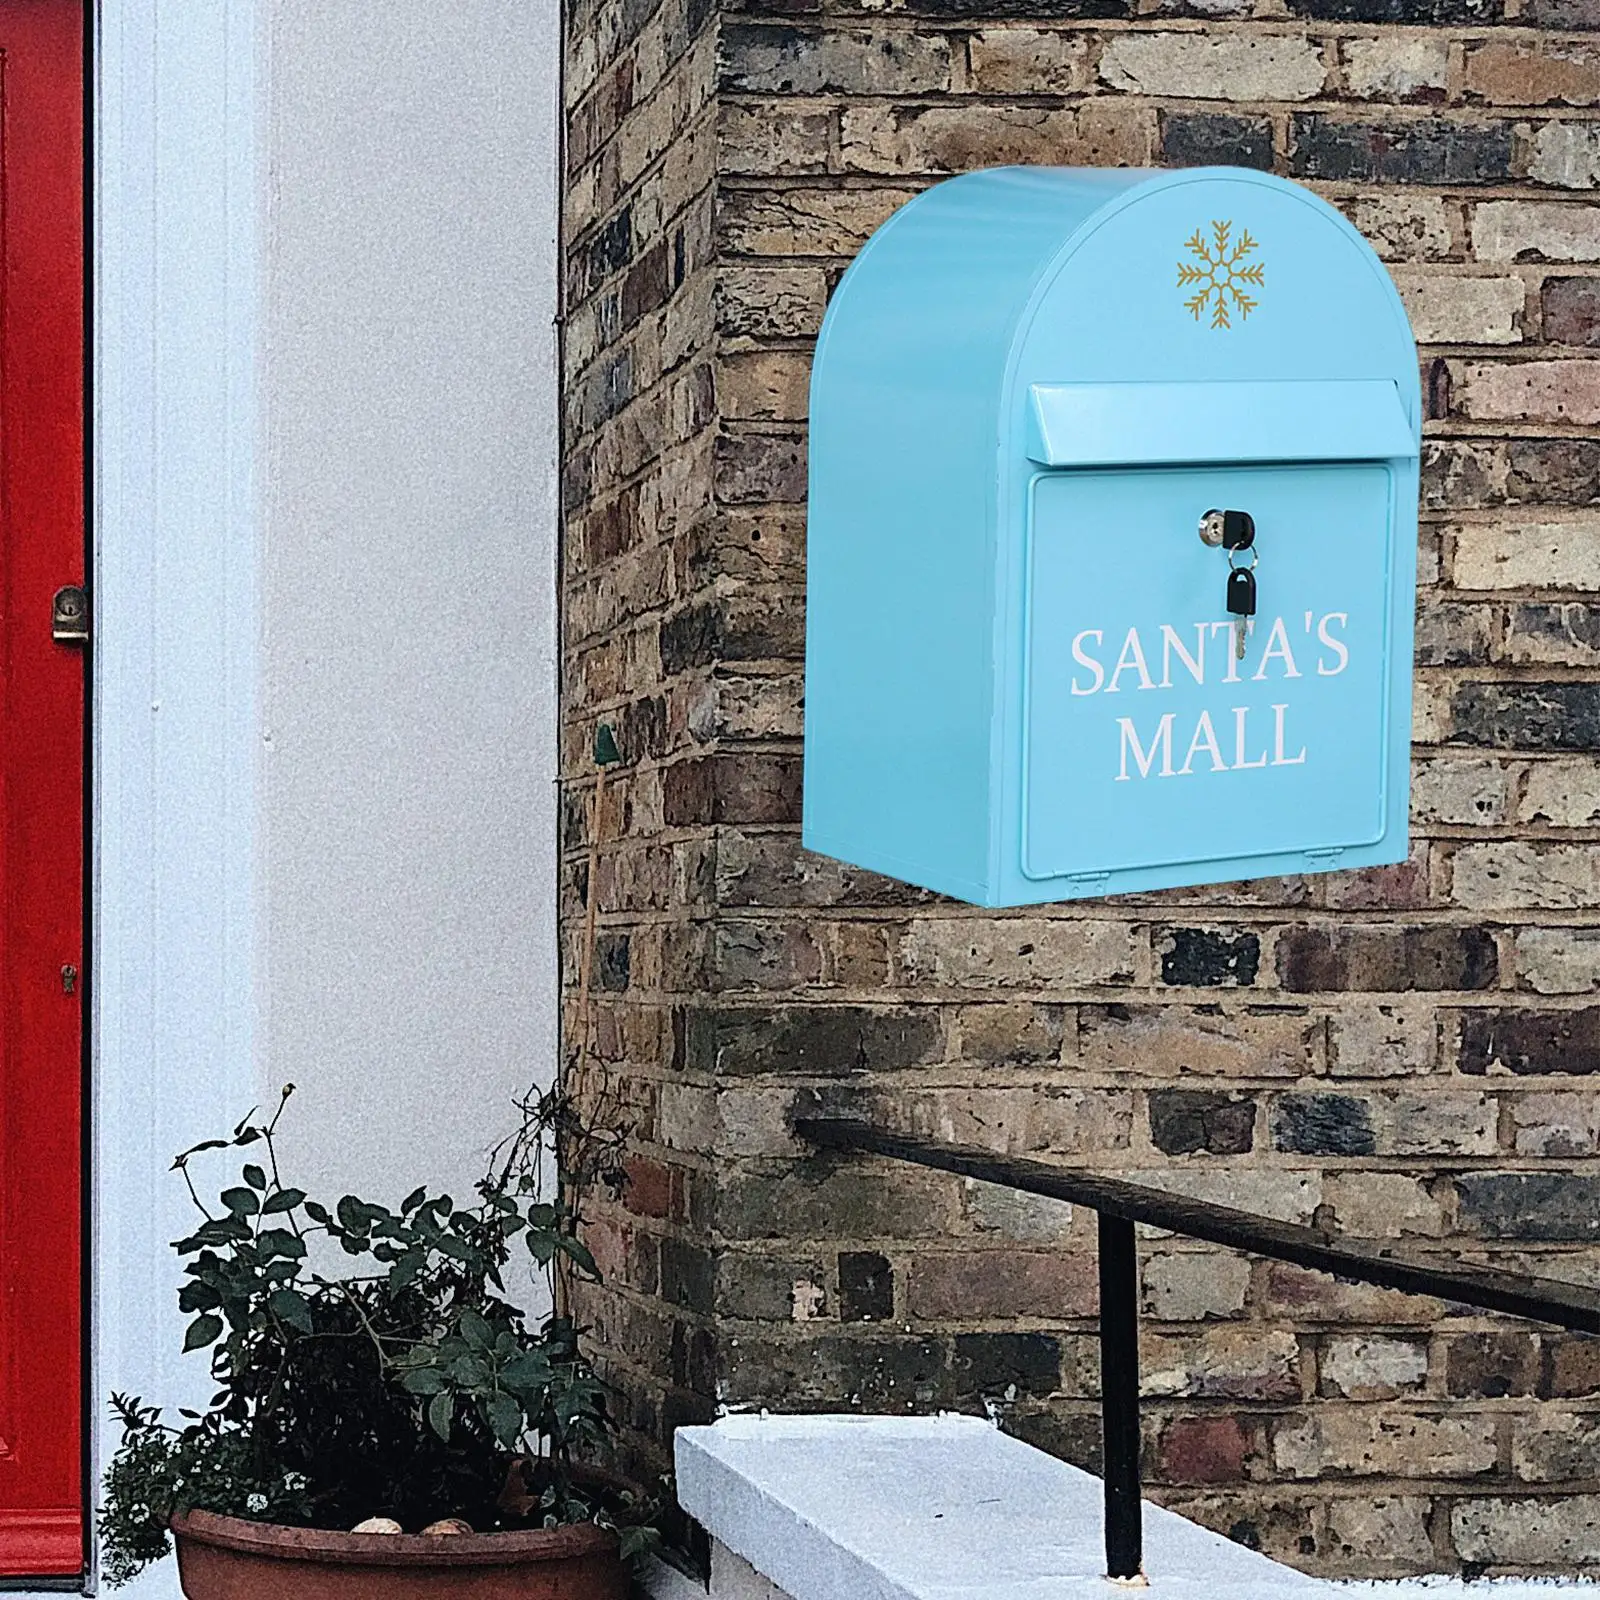  Post Box Large Entrance with 2 Keys Locking Key Envelopes Postbox Case  Large Capacity Mail Box for Rural Decor